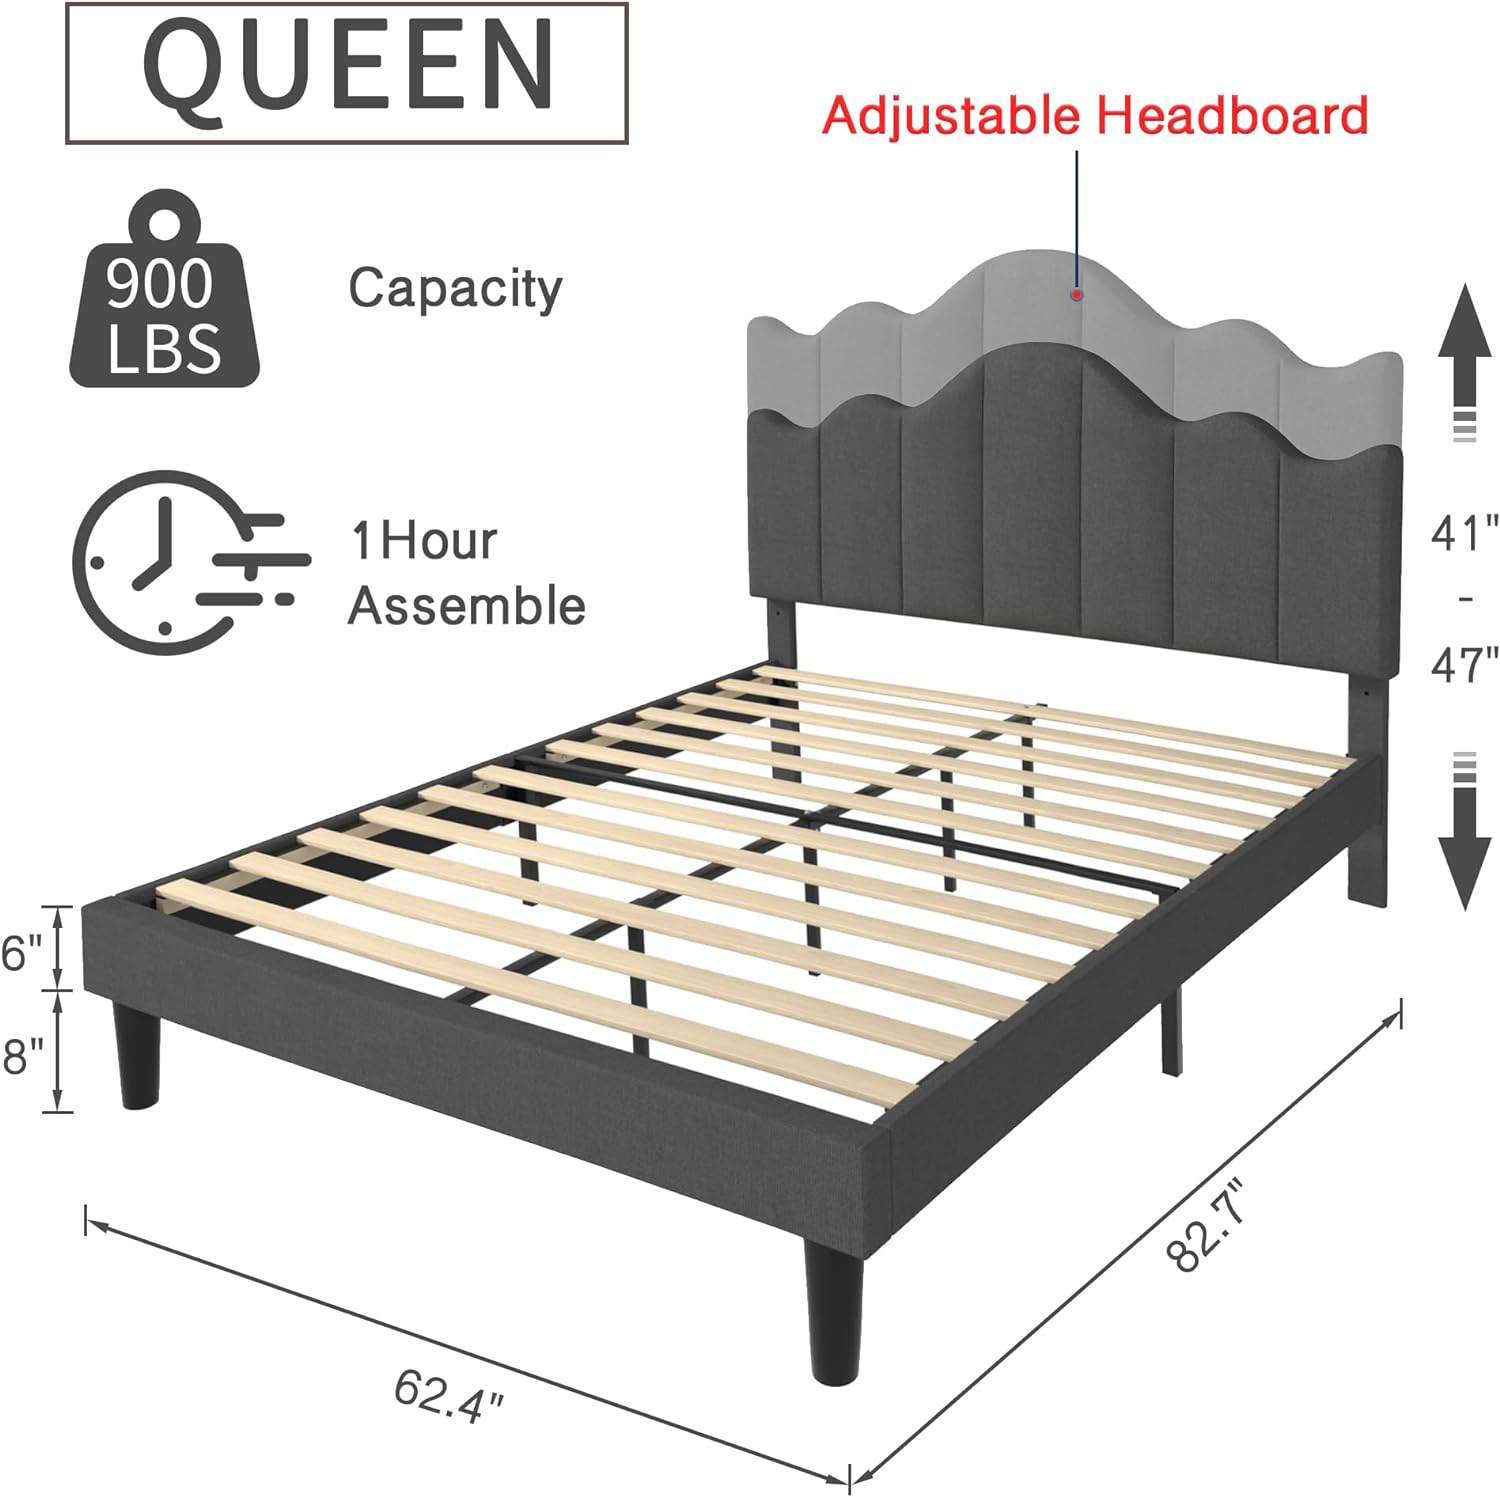 VECELO Upholstered Platform Bed,Mattress Foundation with Headboard